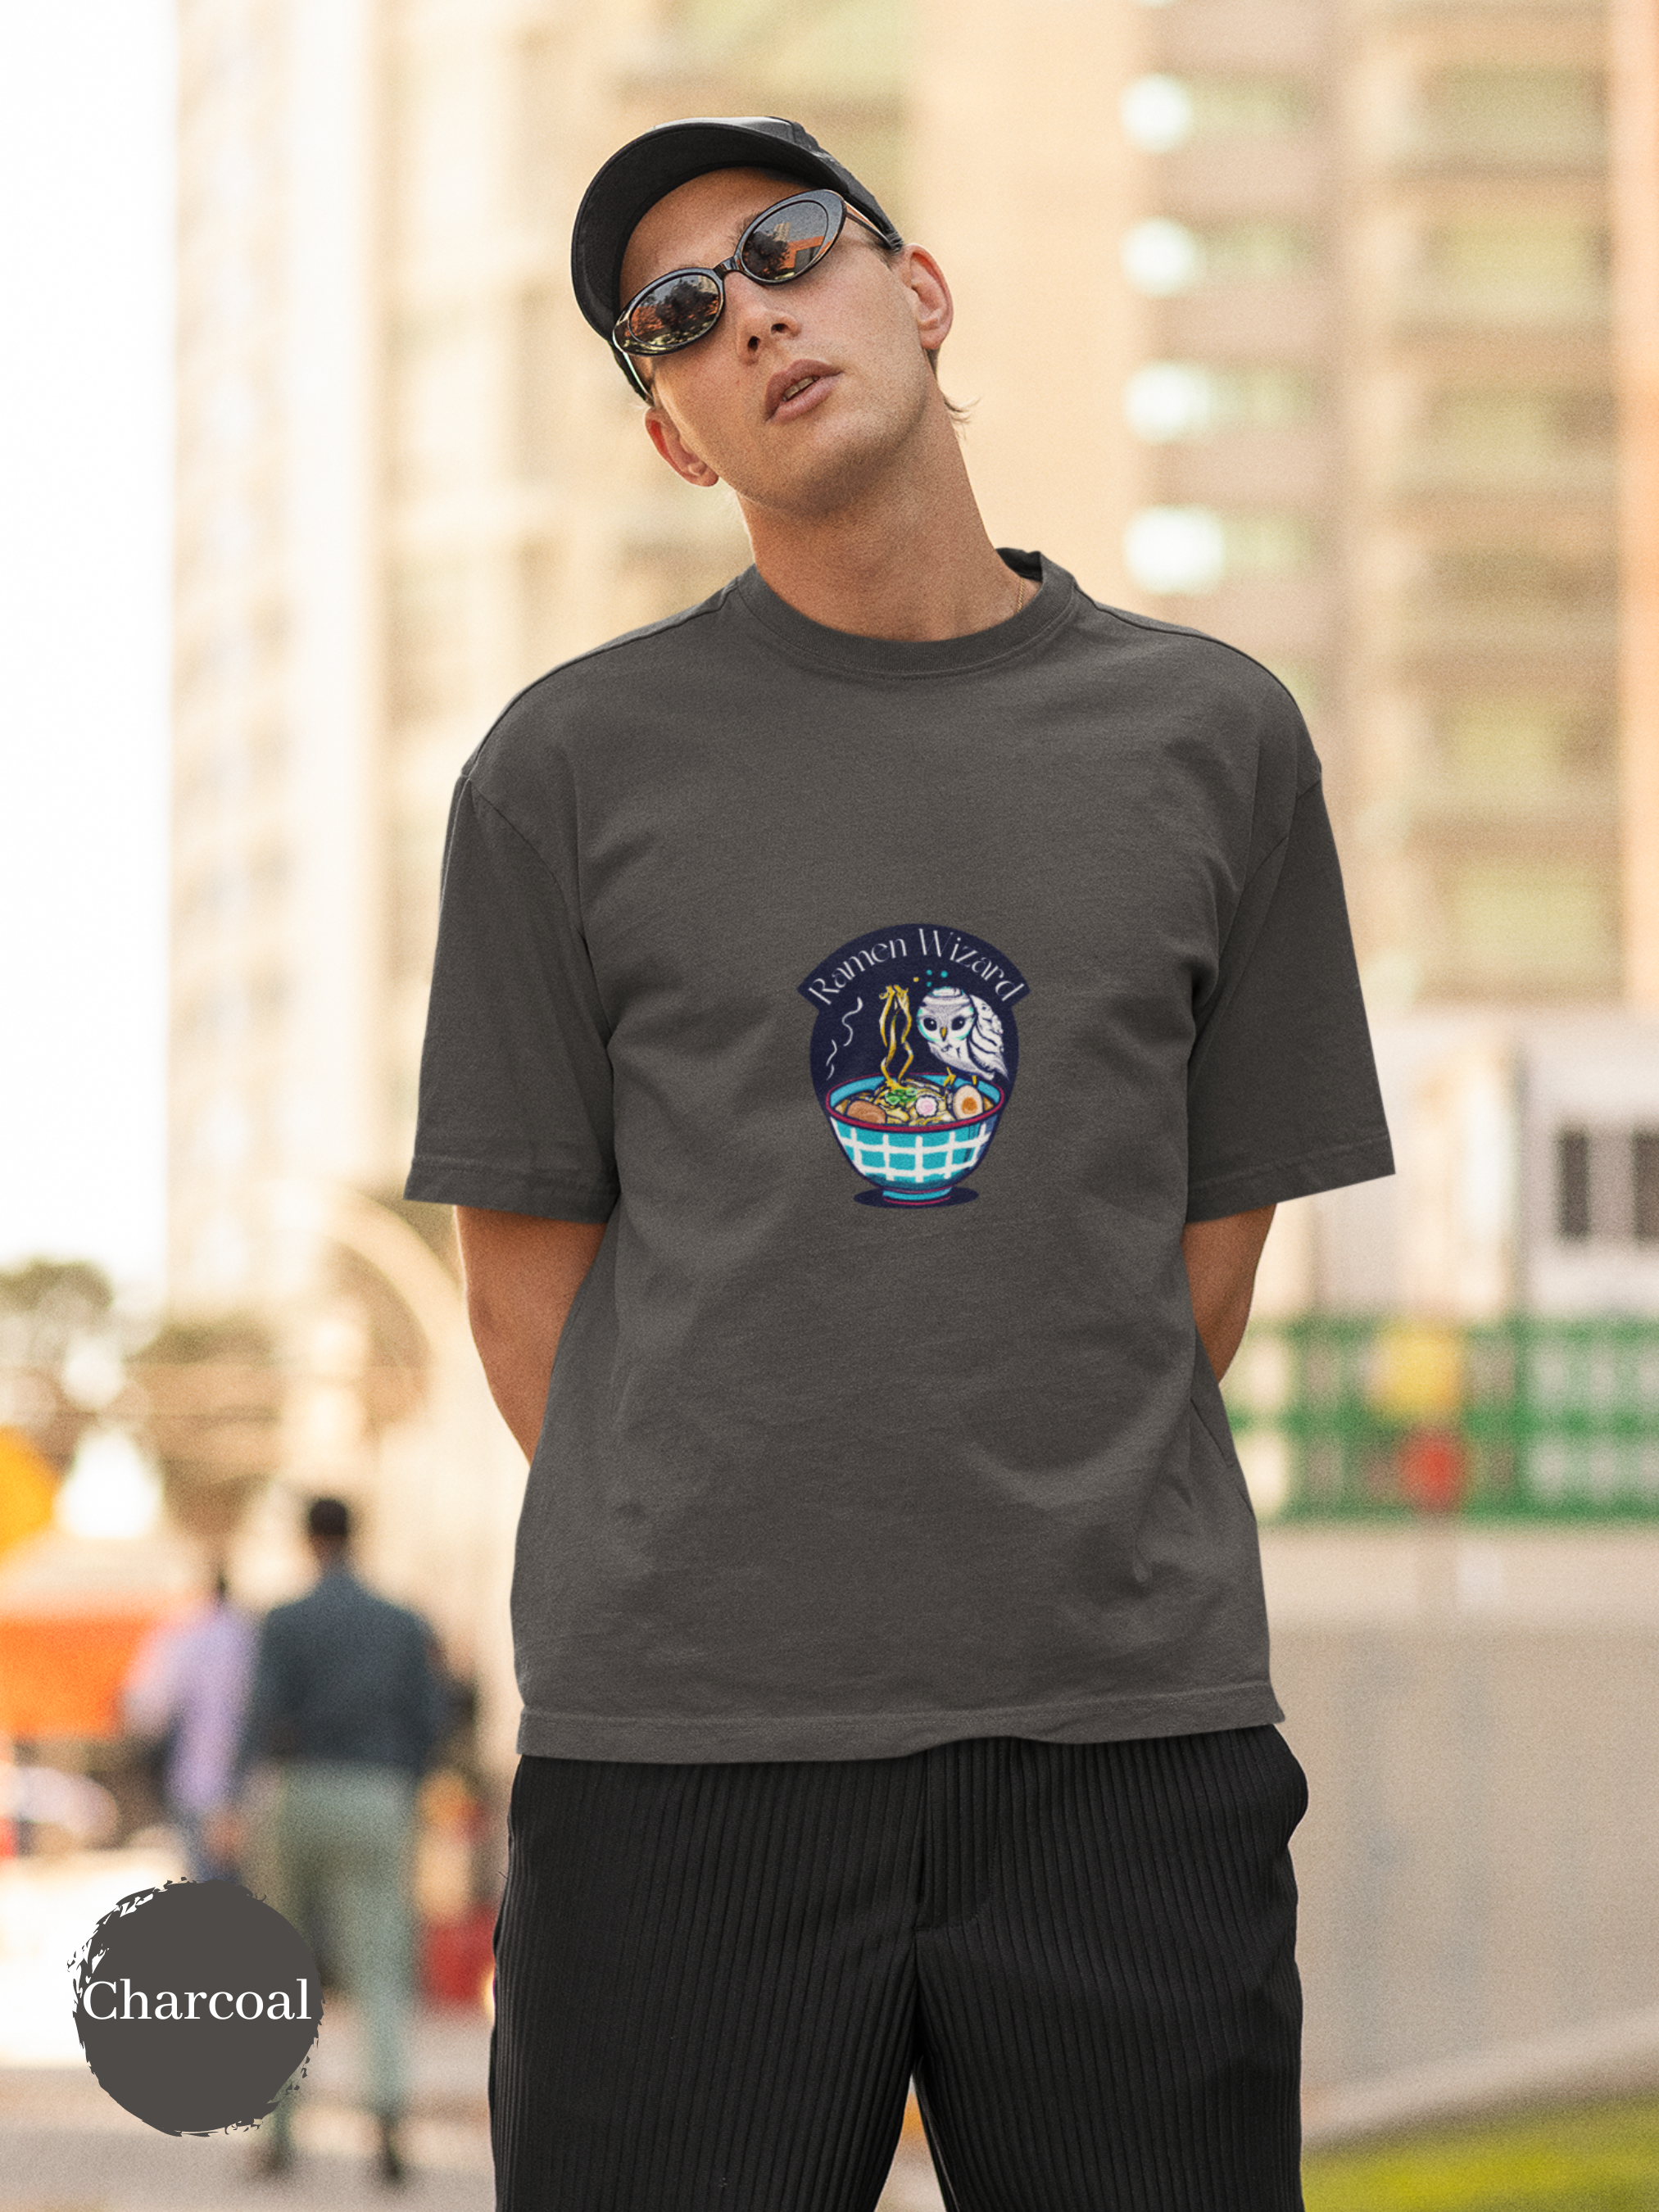 Ramen Wizard Owl T-Shirt: Japanese Shirt for Foodie Fans and Ramen Art Enthusiasts